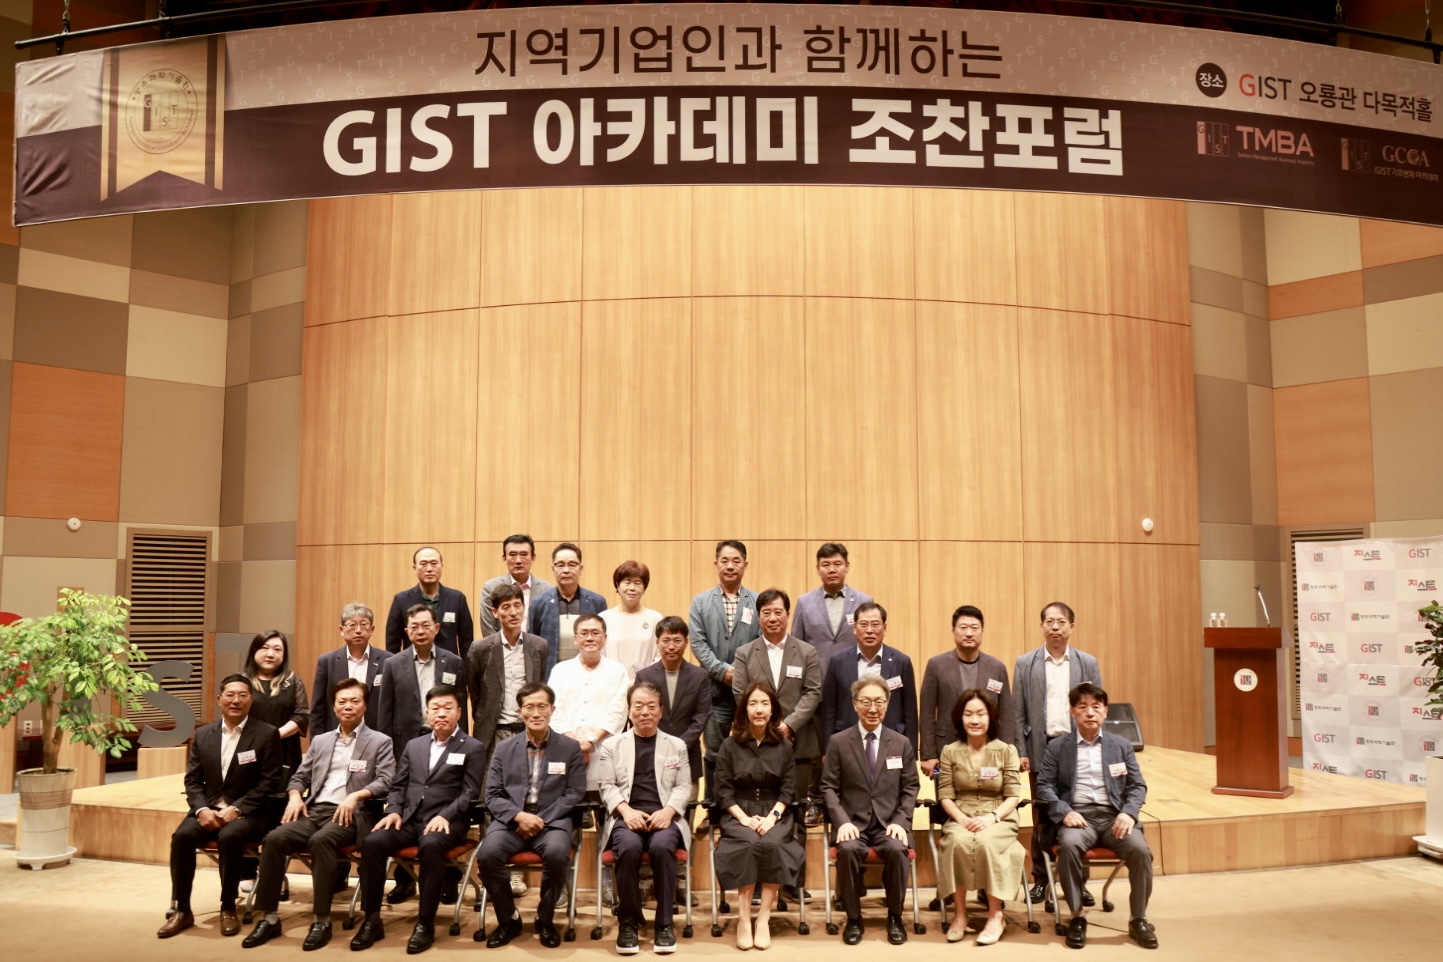 'GIST Academy September Breakfast Forum' held... Professor Hojung Nam’s gives lecture on new drug design AI platform development 이미지